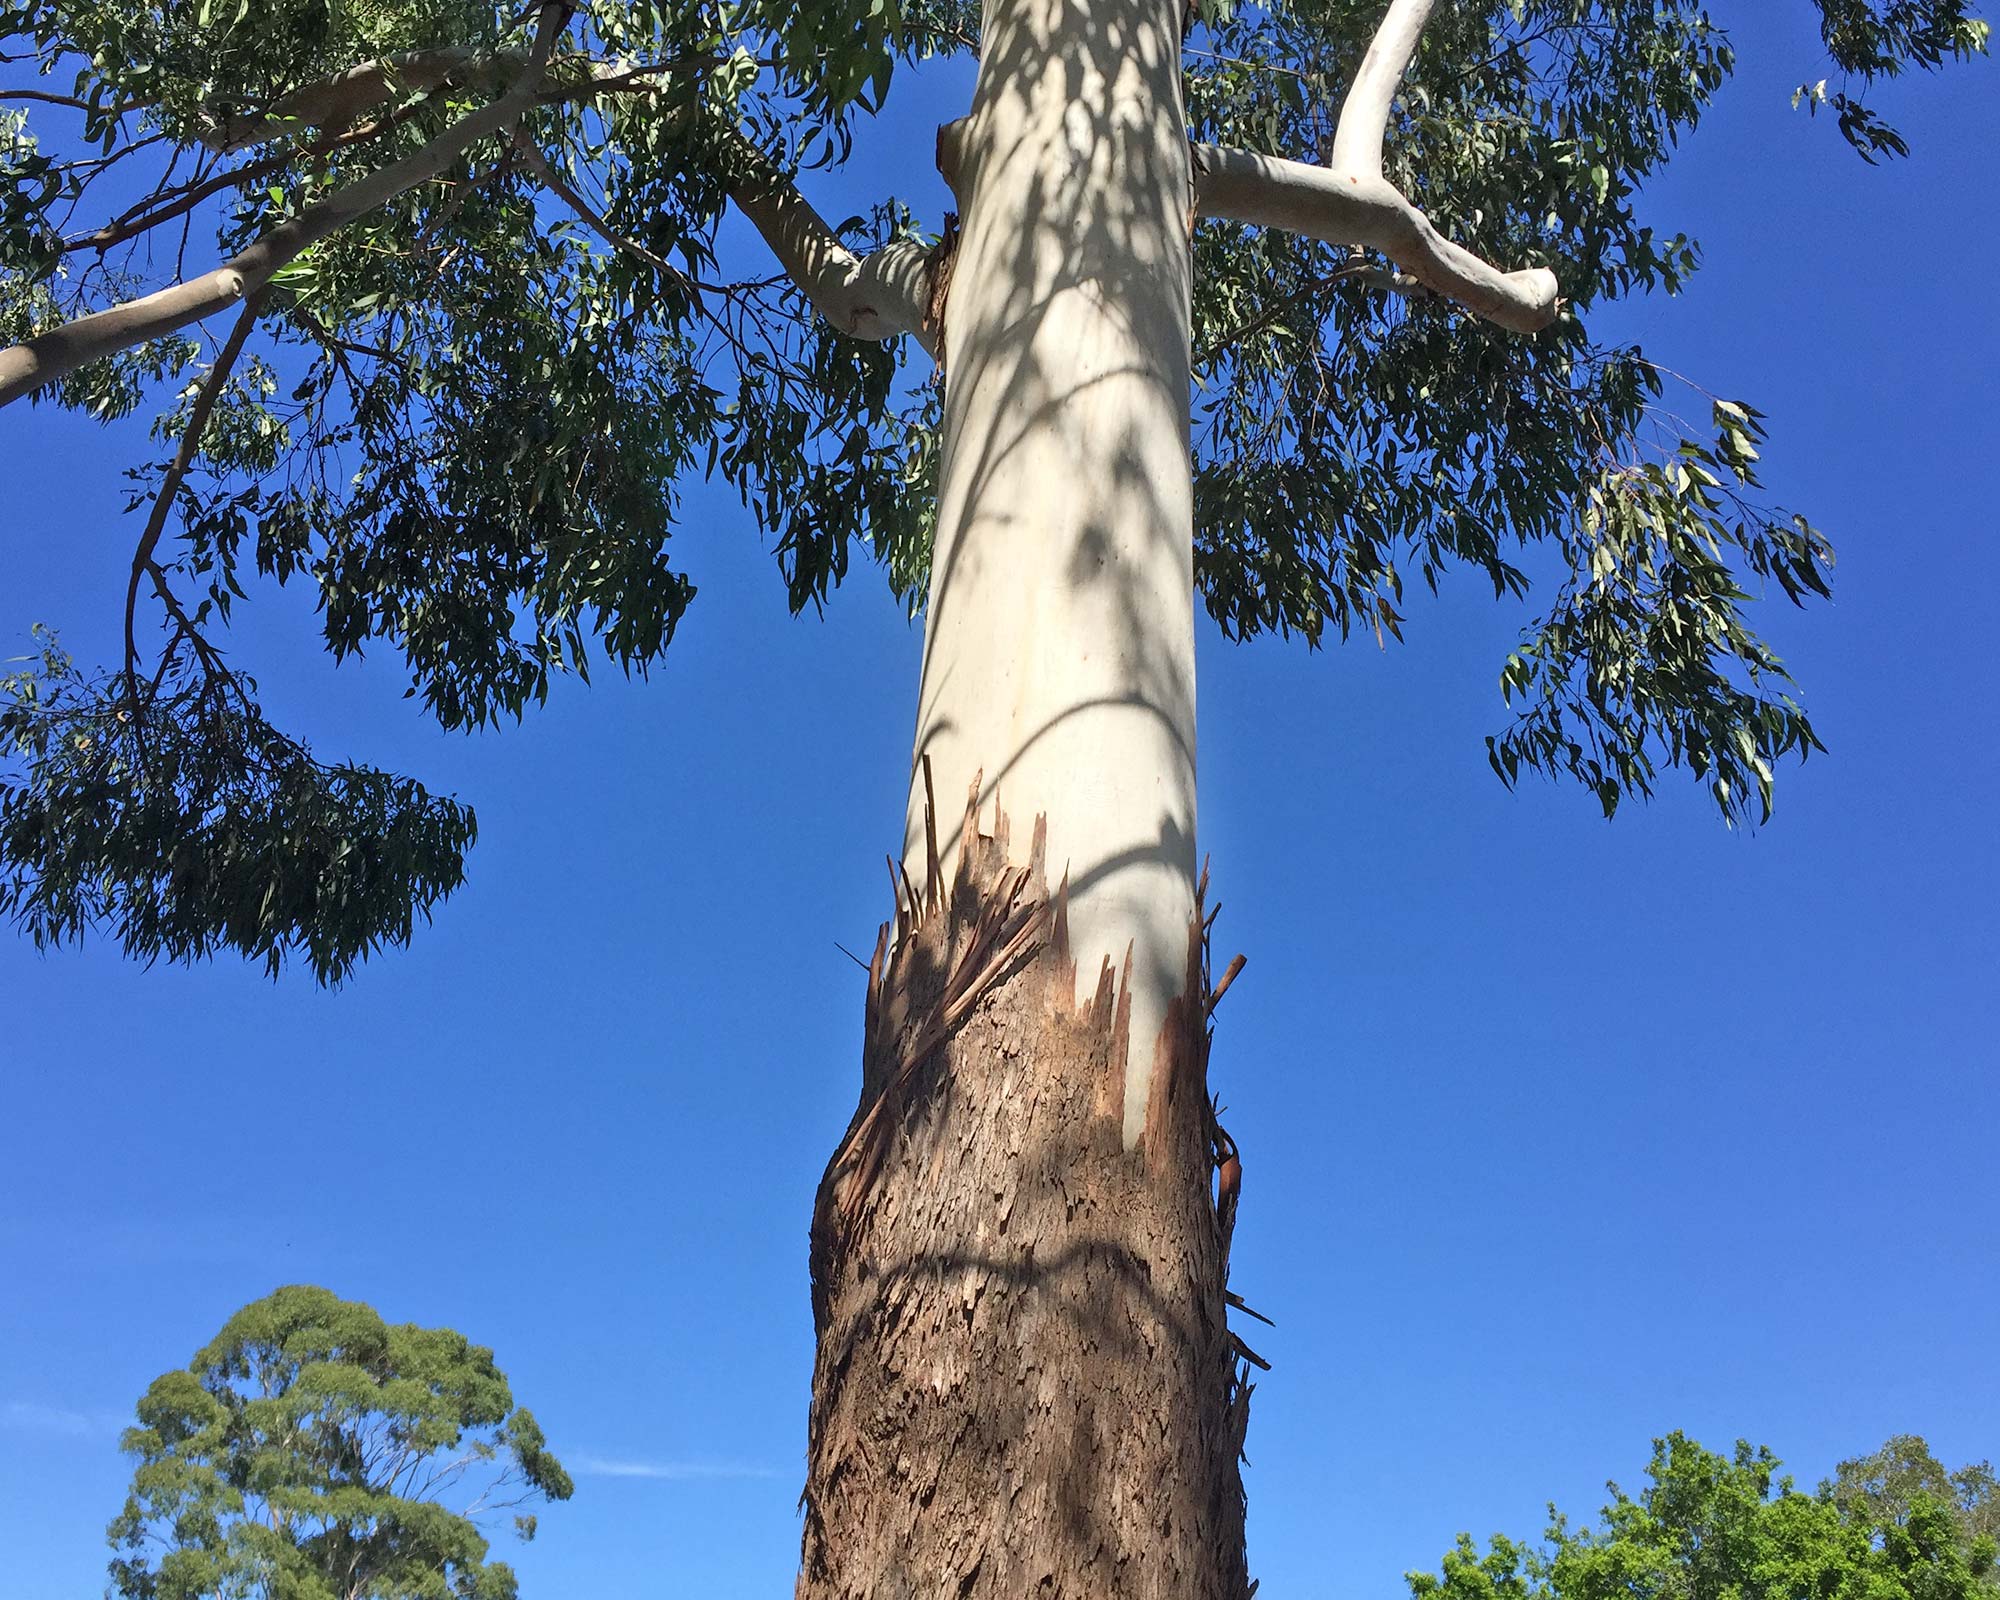 Eucalyptus saligna,  Sydney Blue Gum  Skirt of rough bark on lower trunk below the smooth upper trunk